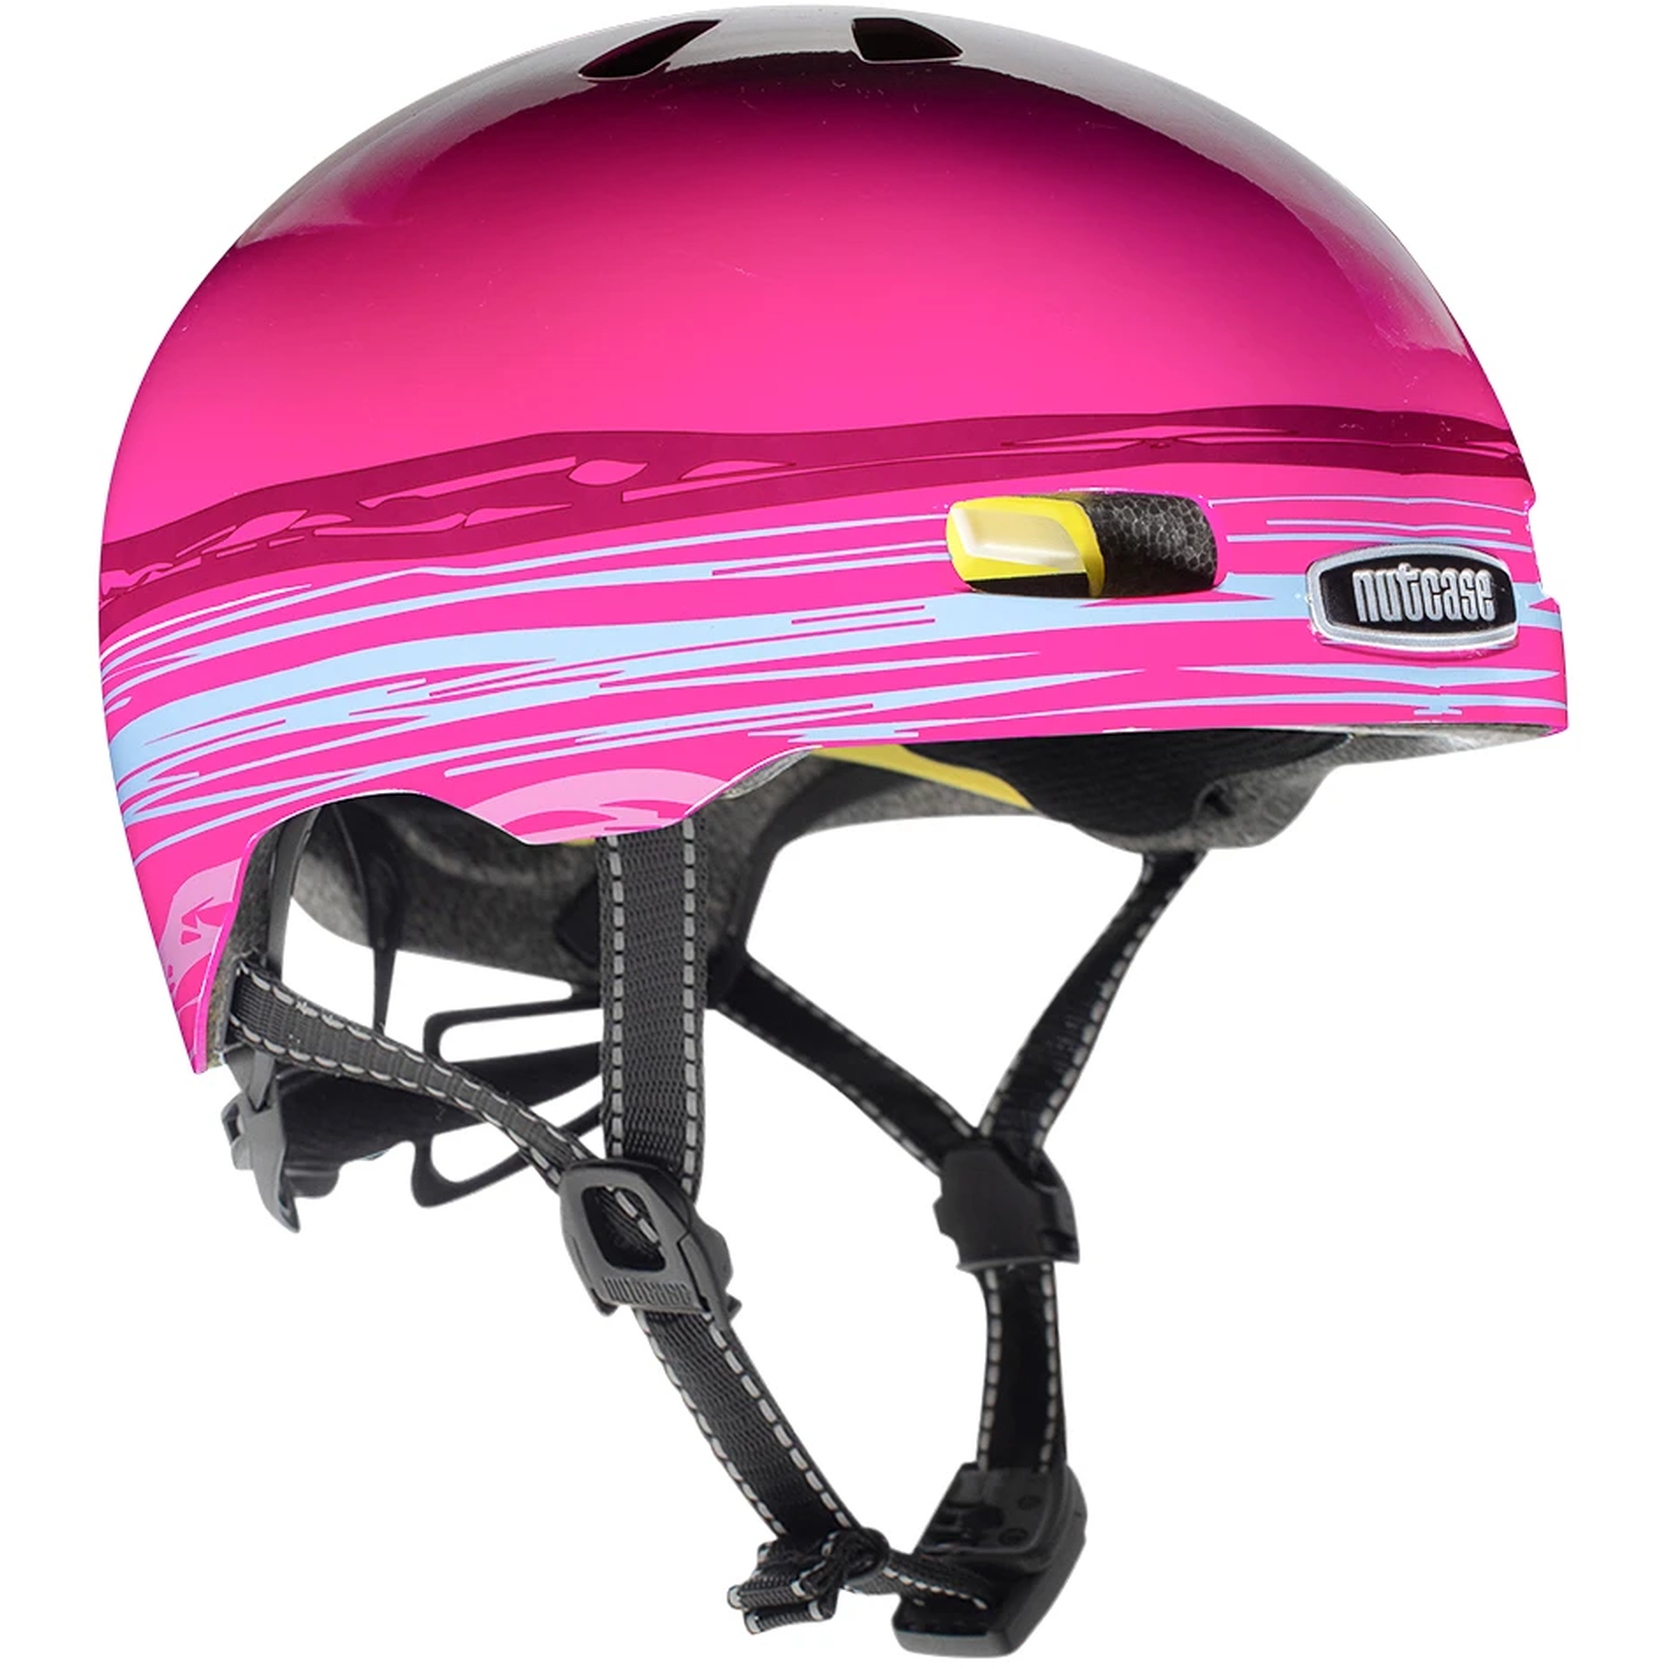 Productfoto van Nutcase Street MIPS Helmet - Offshore